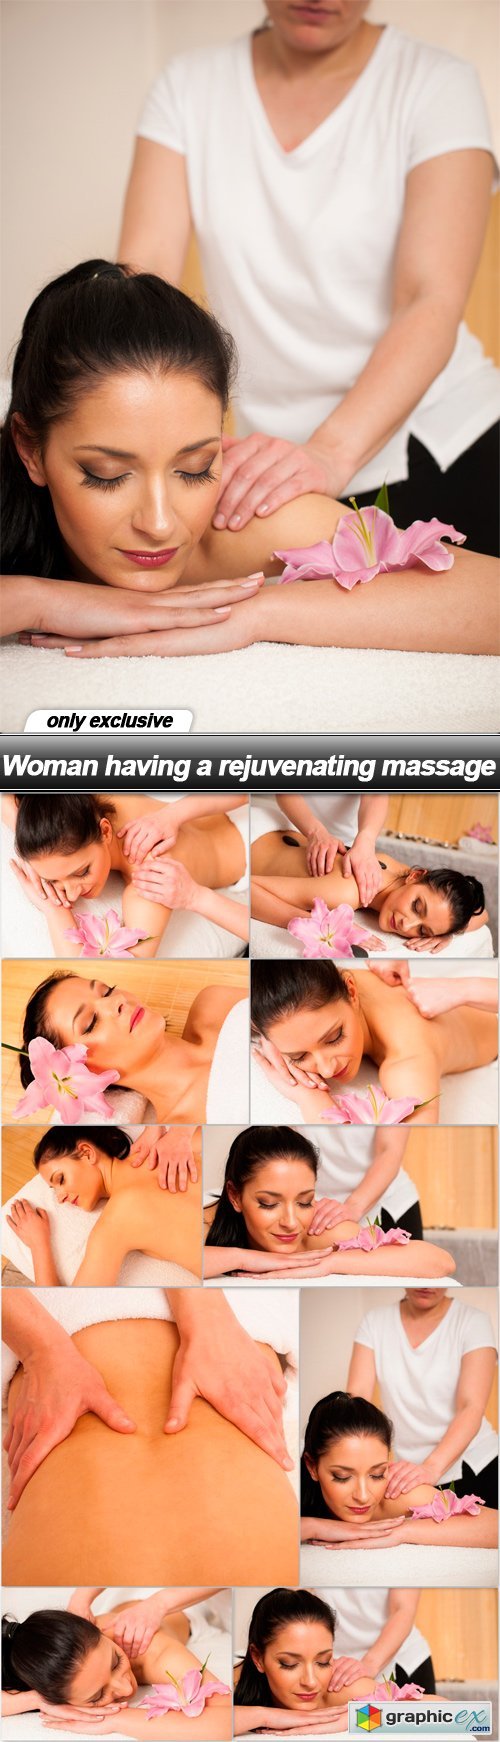 Woman having a rejuvenating massage - 10 UHQ JPEG